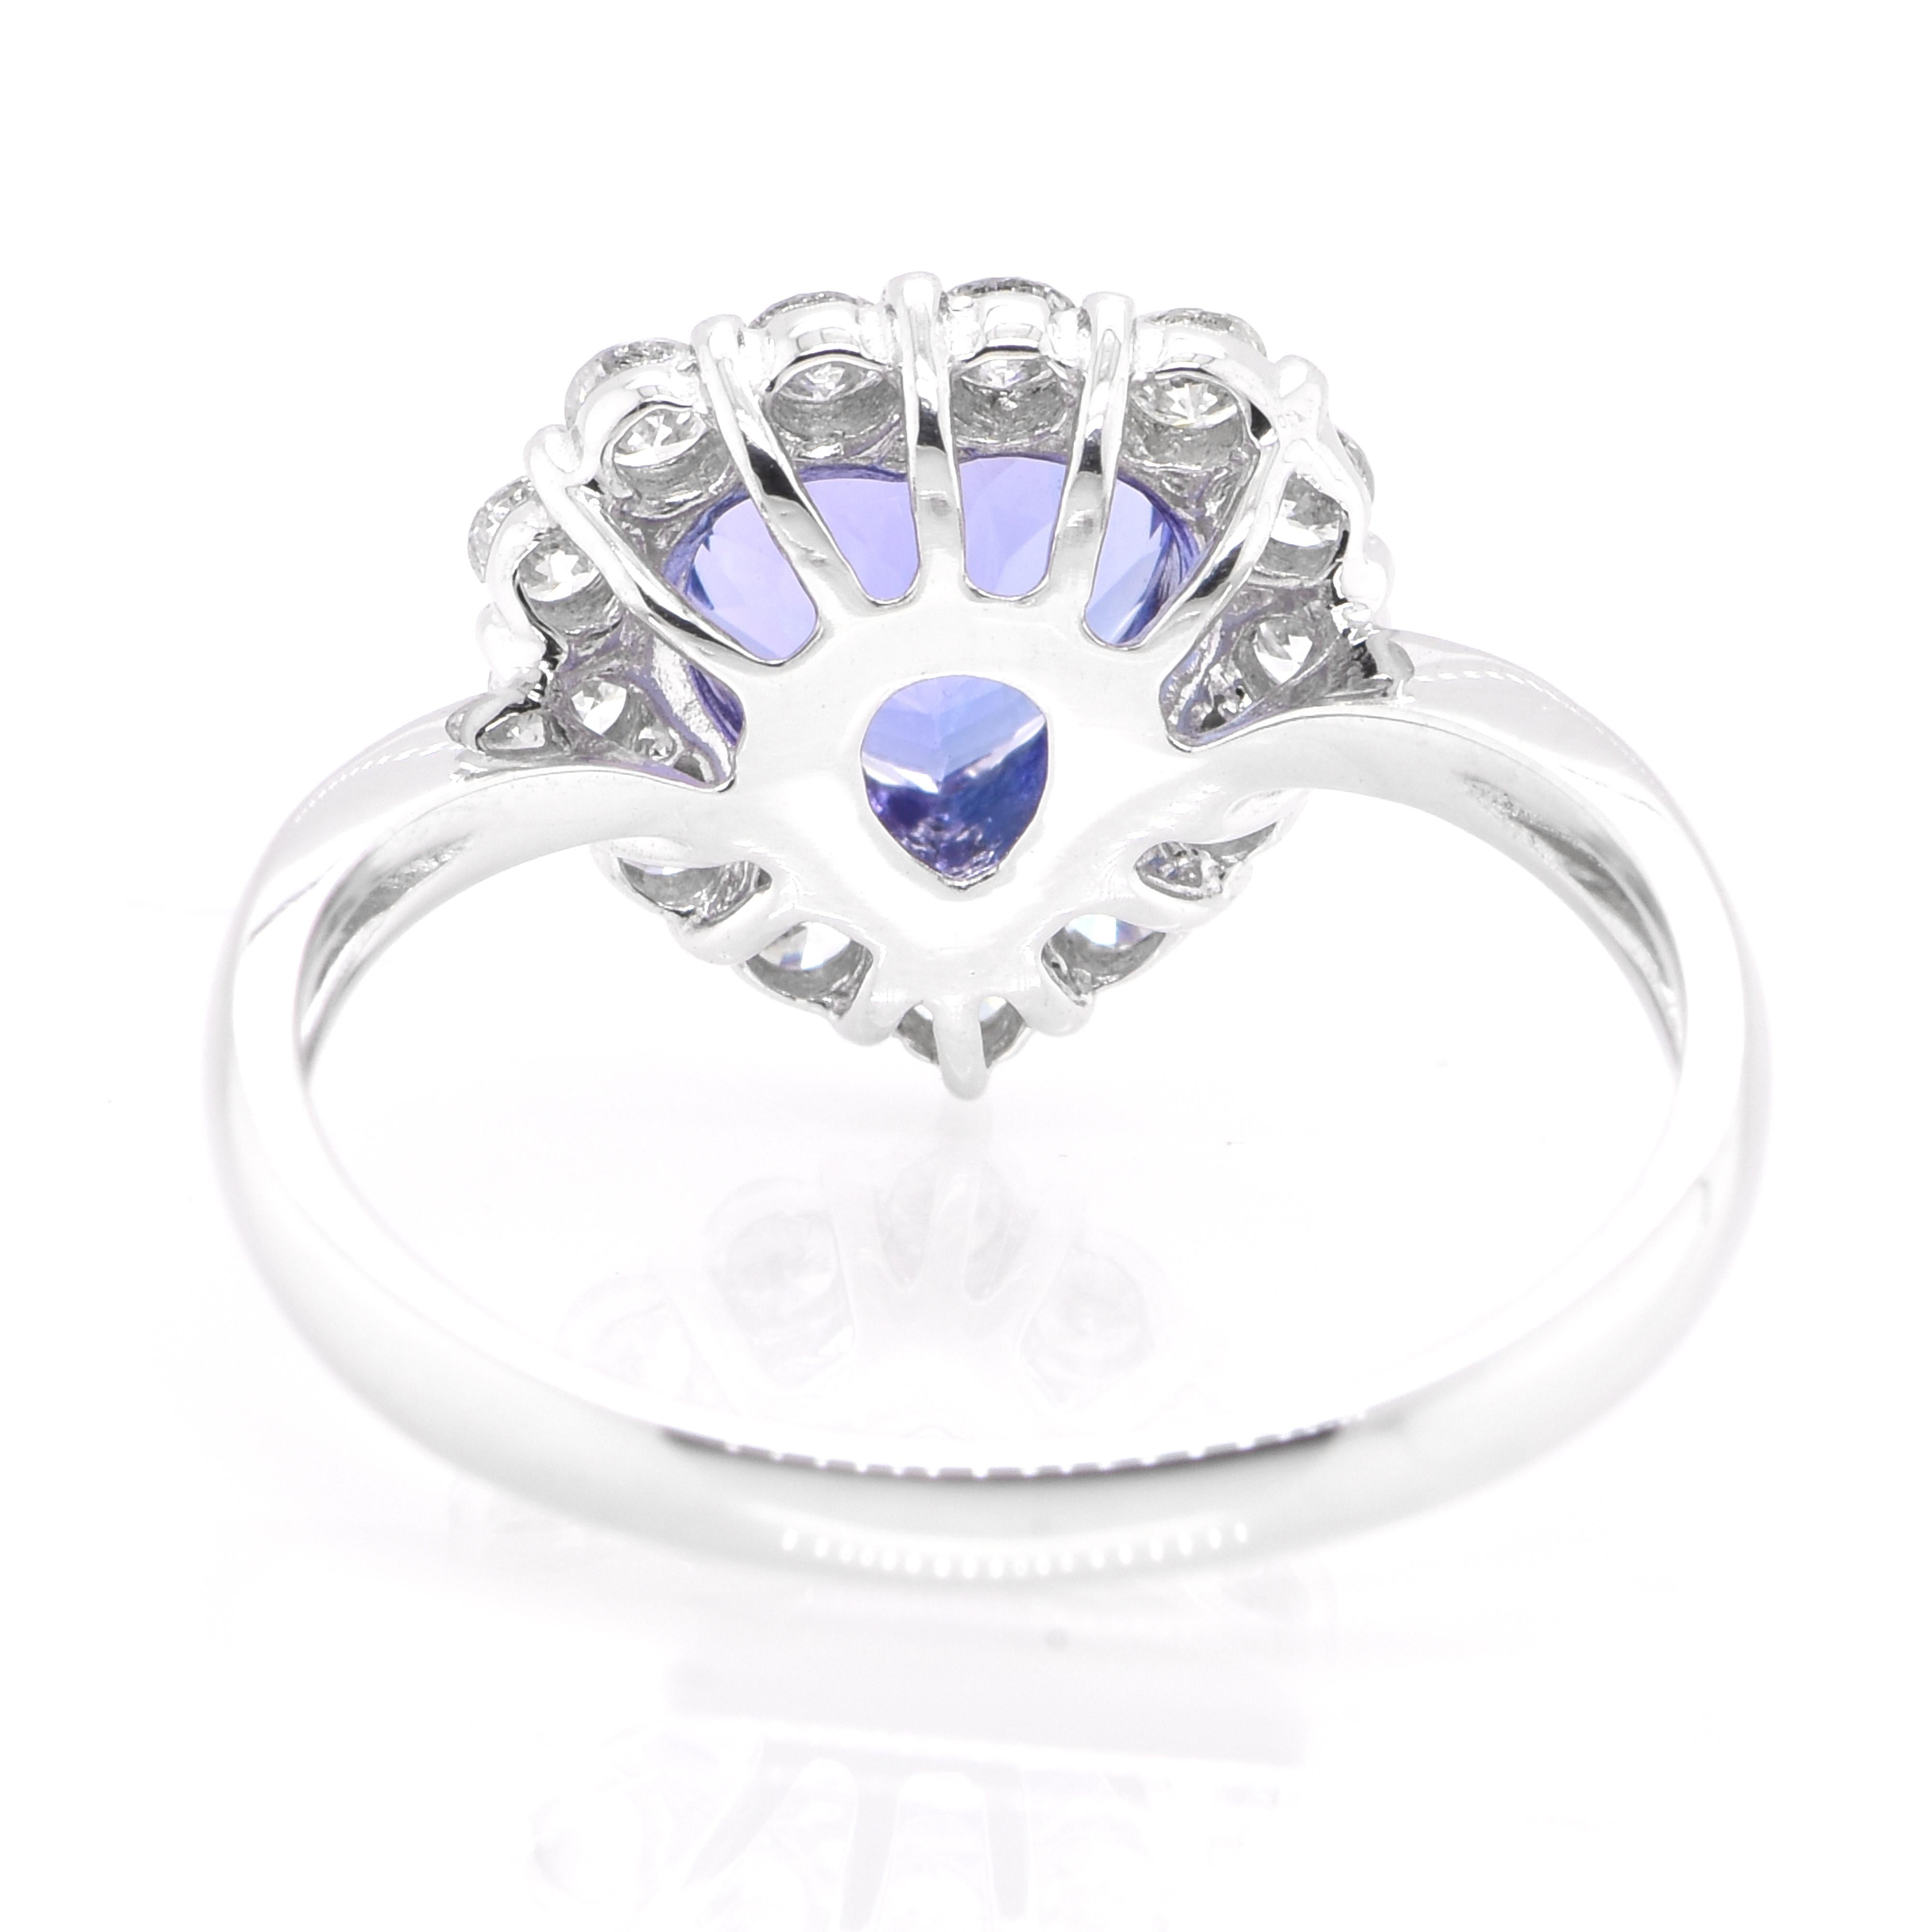 Women's 1.18 Carat Natural Heart Cut Tanzanite & Diamond Engagement Ring Set in Platinum